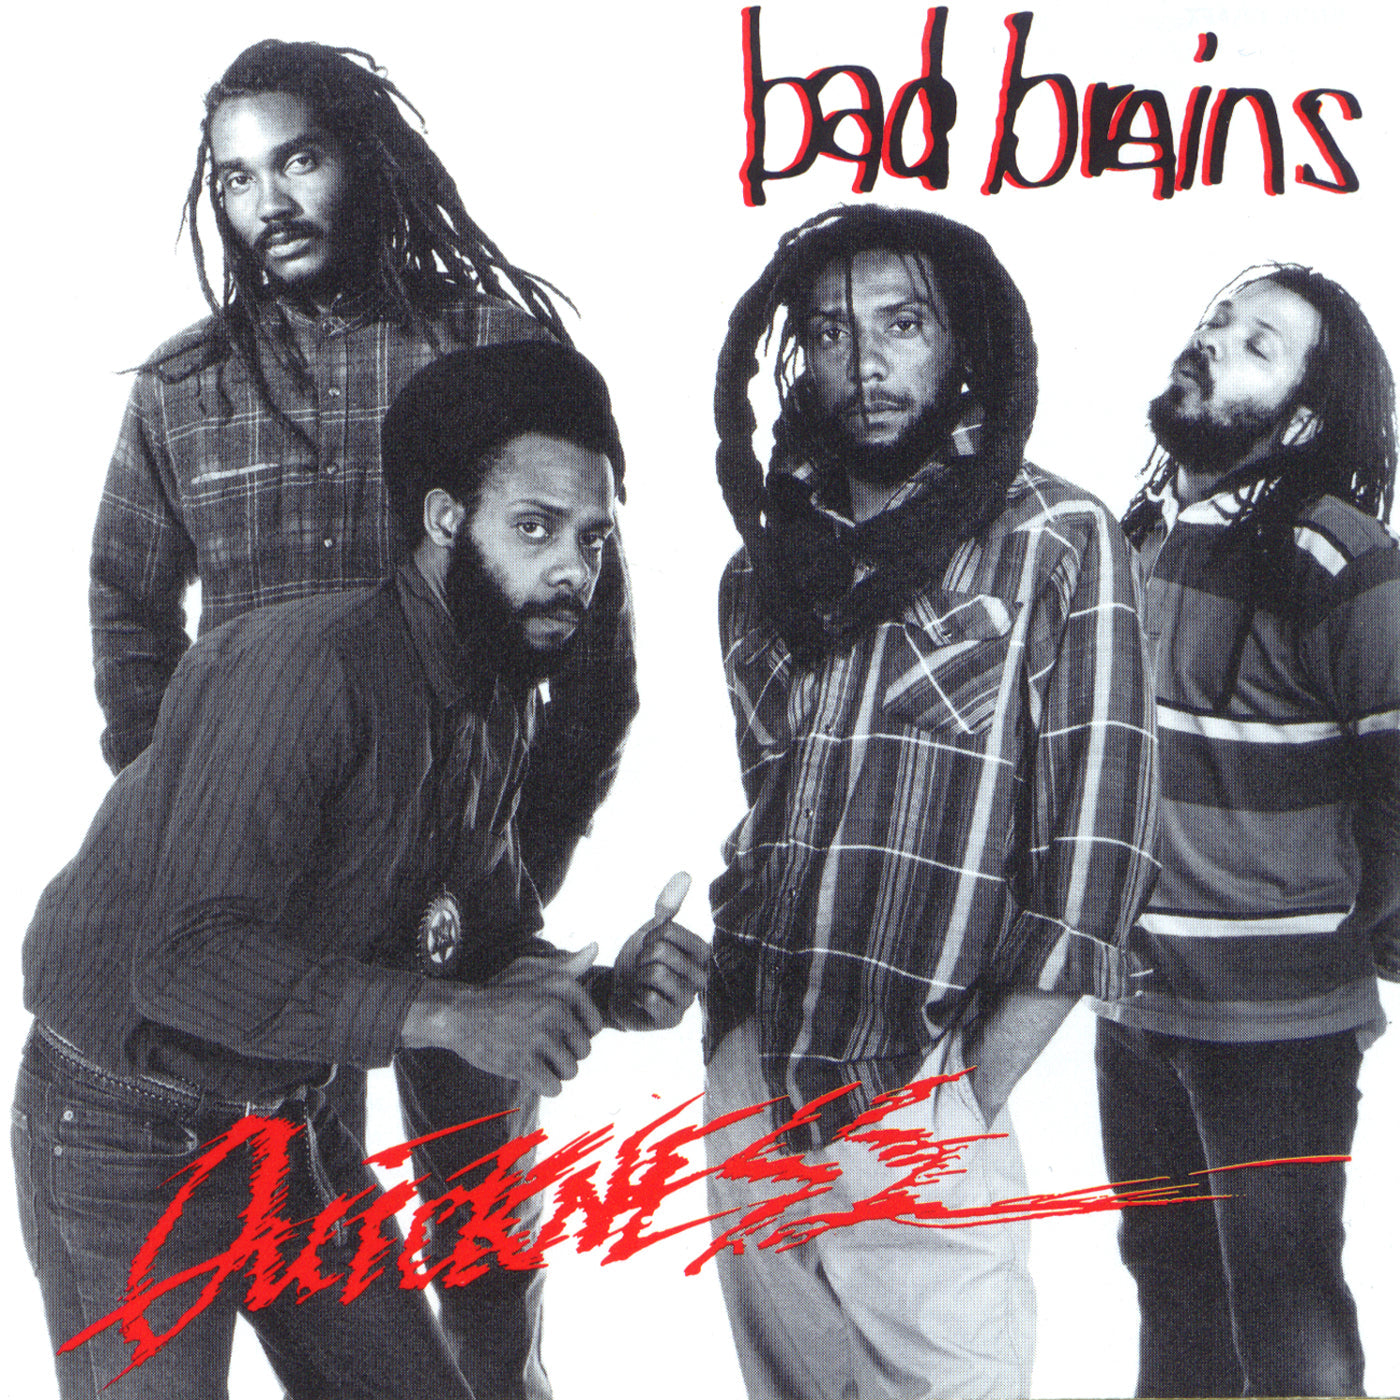 Bad Brains "Quickness" CD